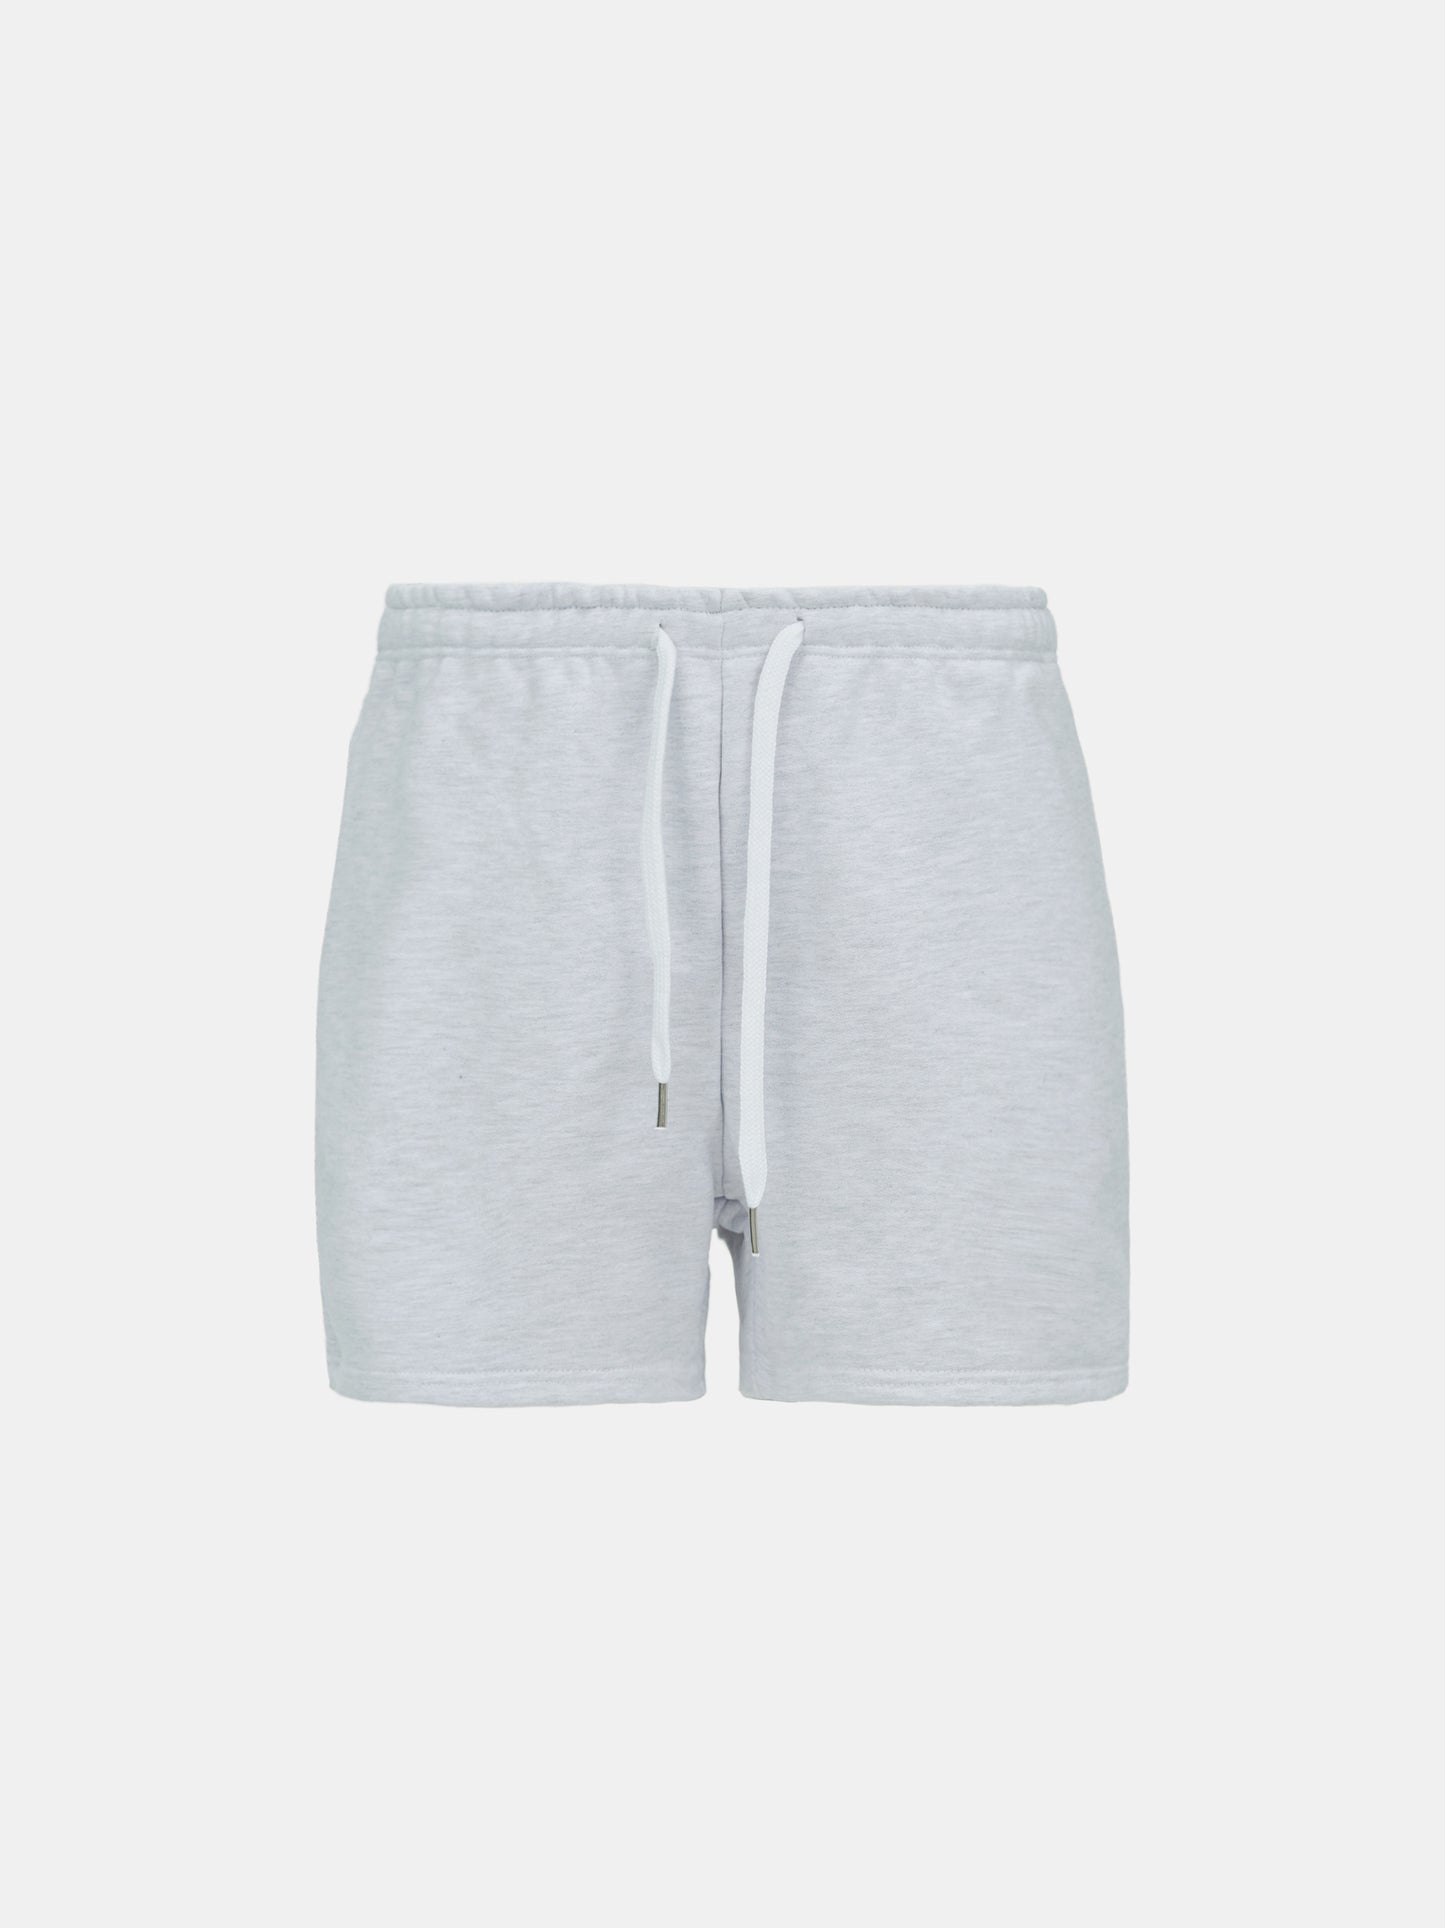 'Sanibel Island' Sweat Shorts, Grey Melange